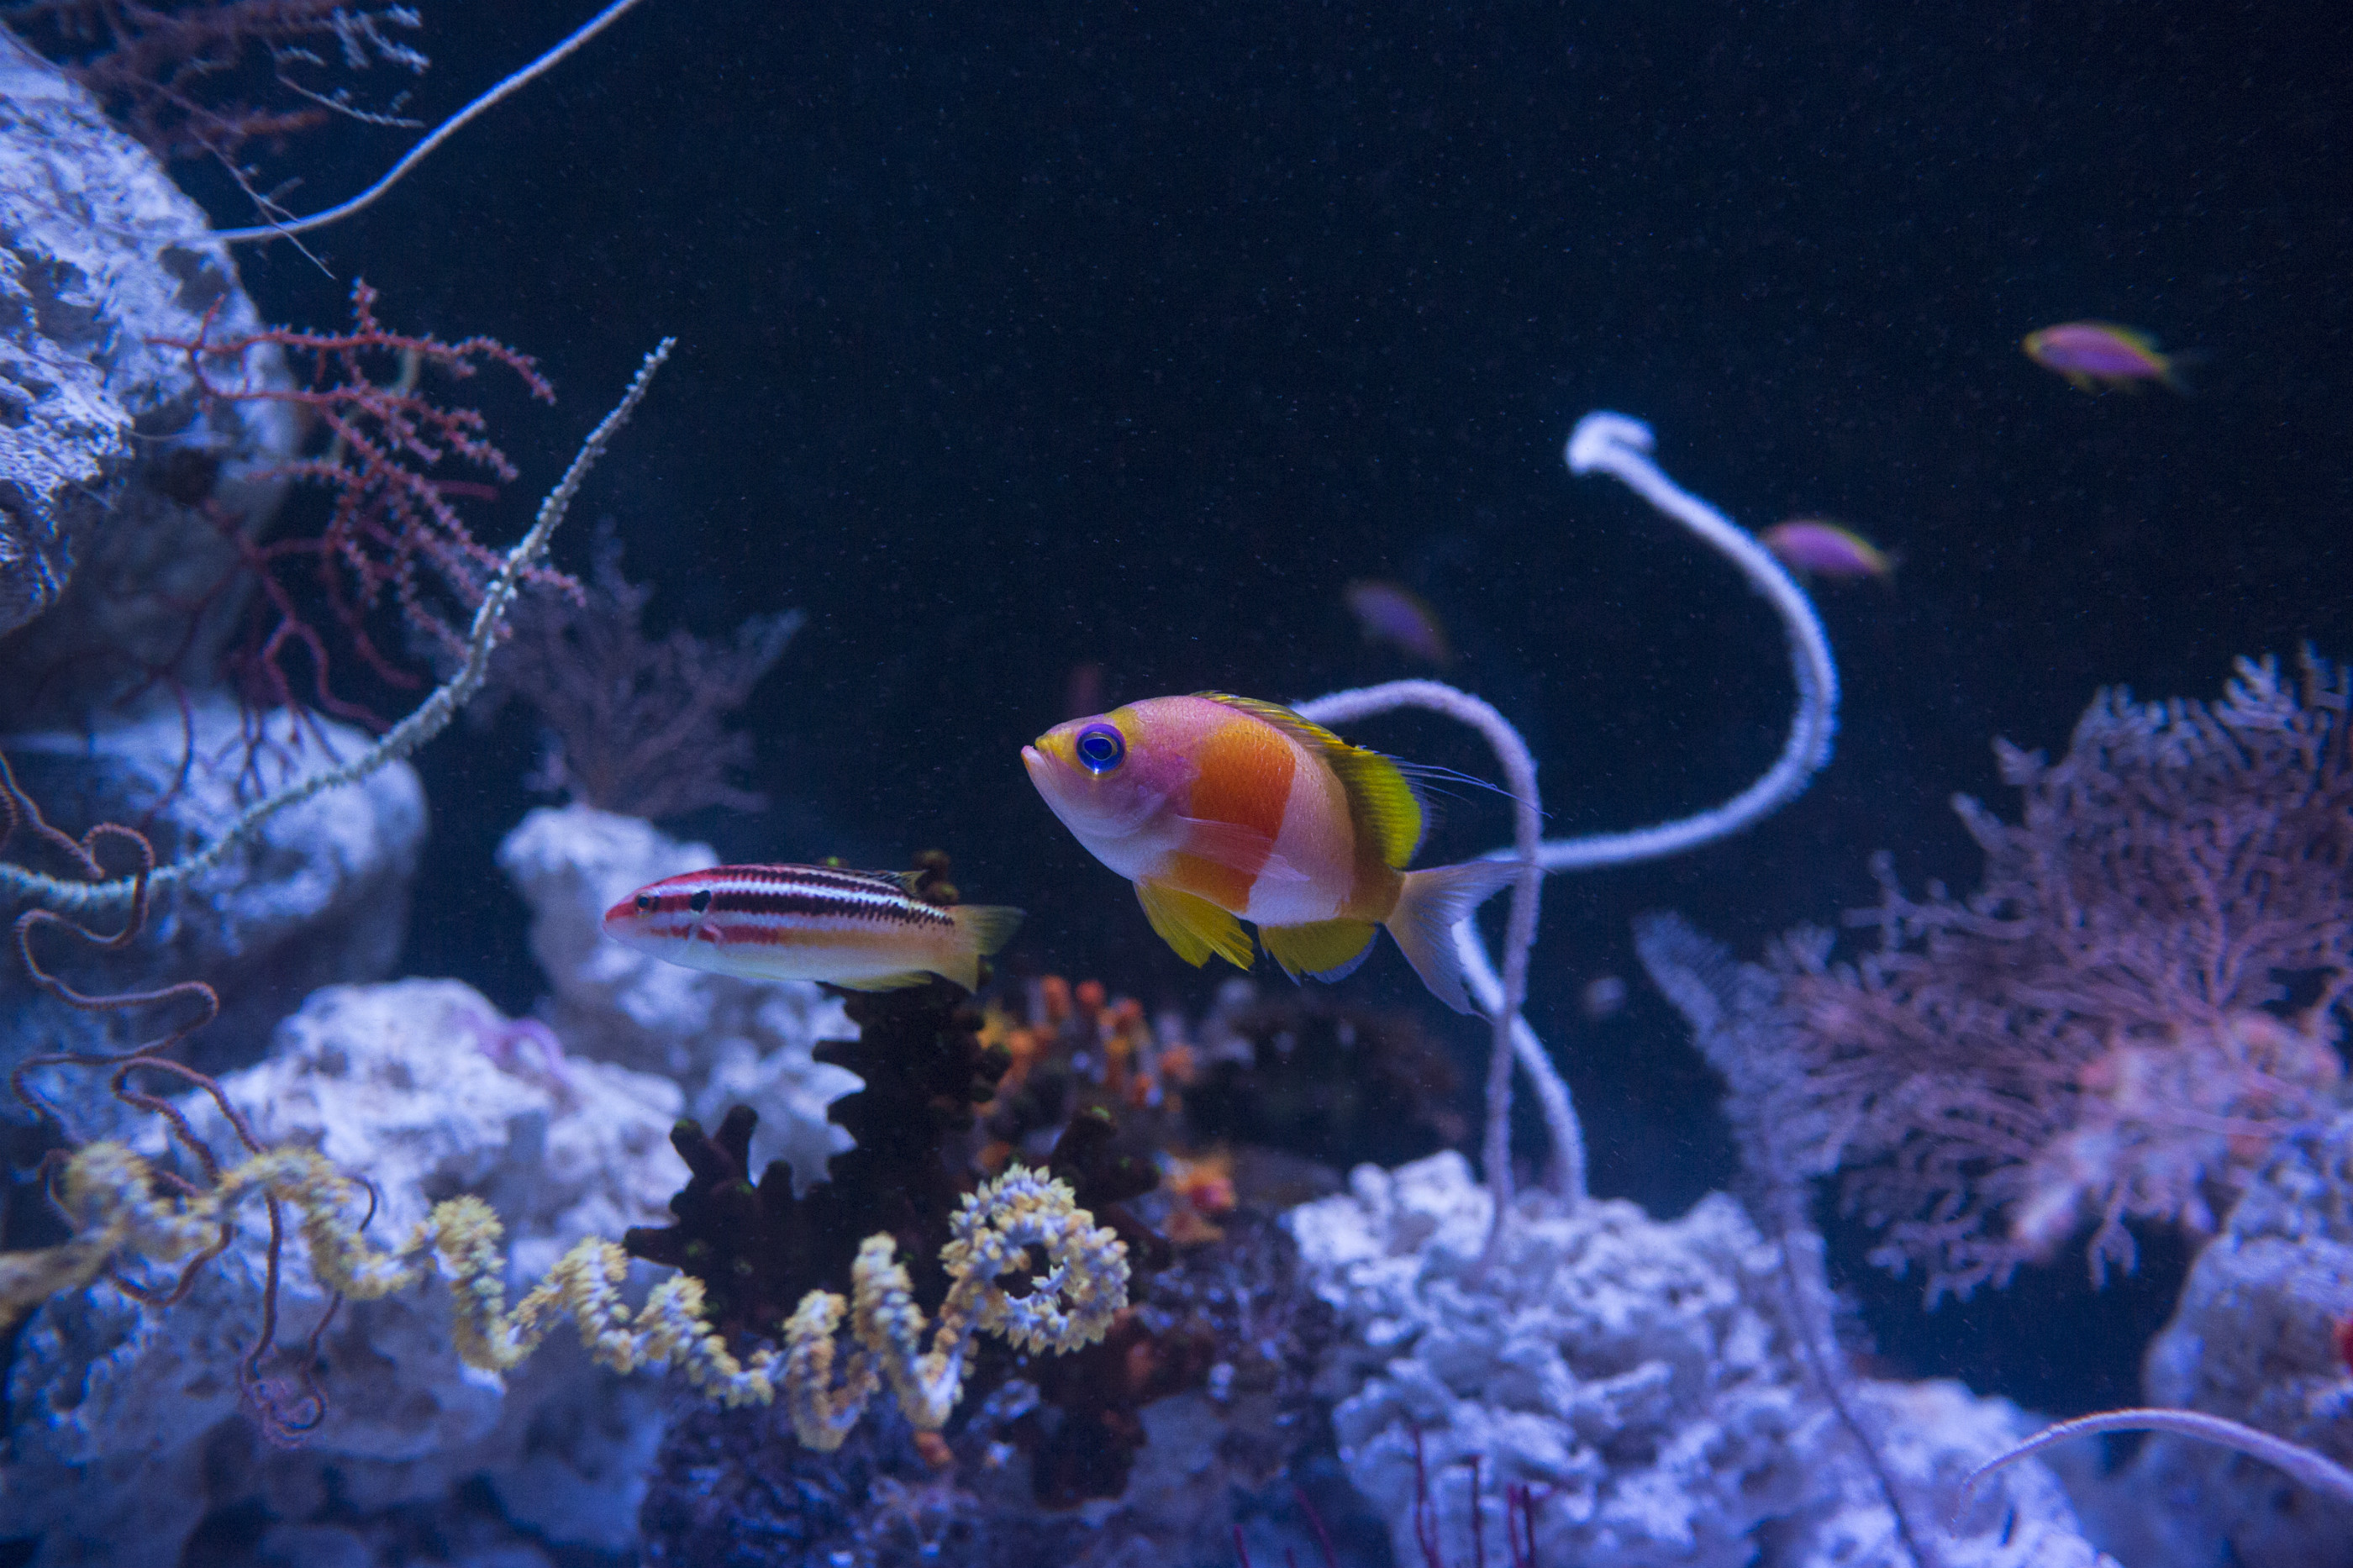 Twilight Zone: Deep Reefs Revealed | California Academy of Sciences